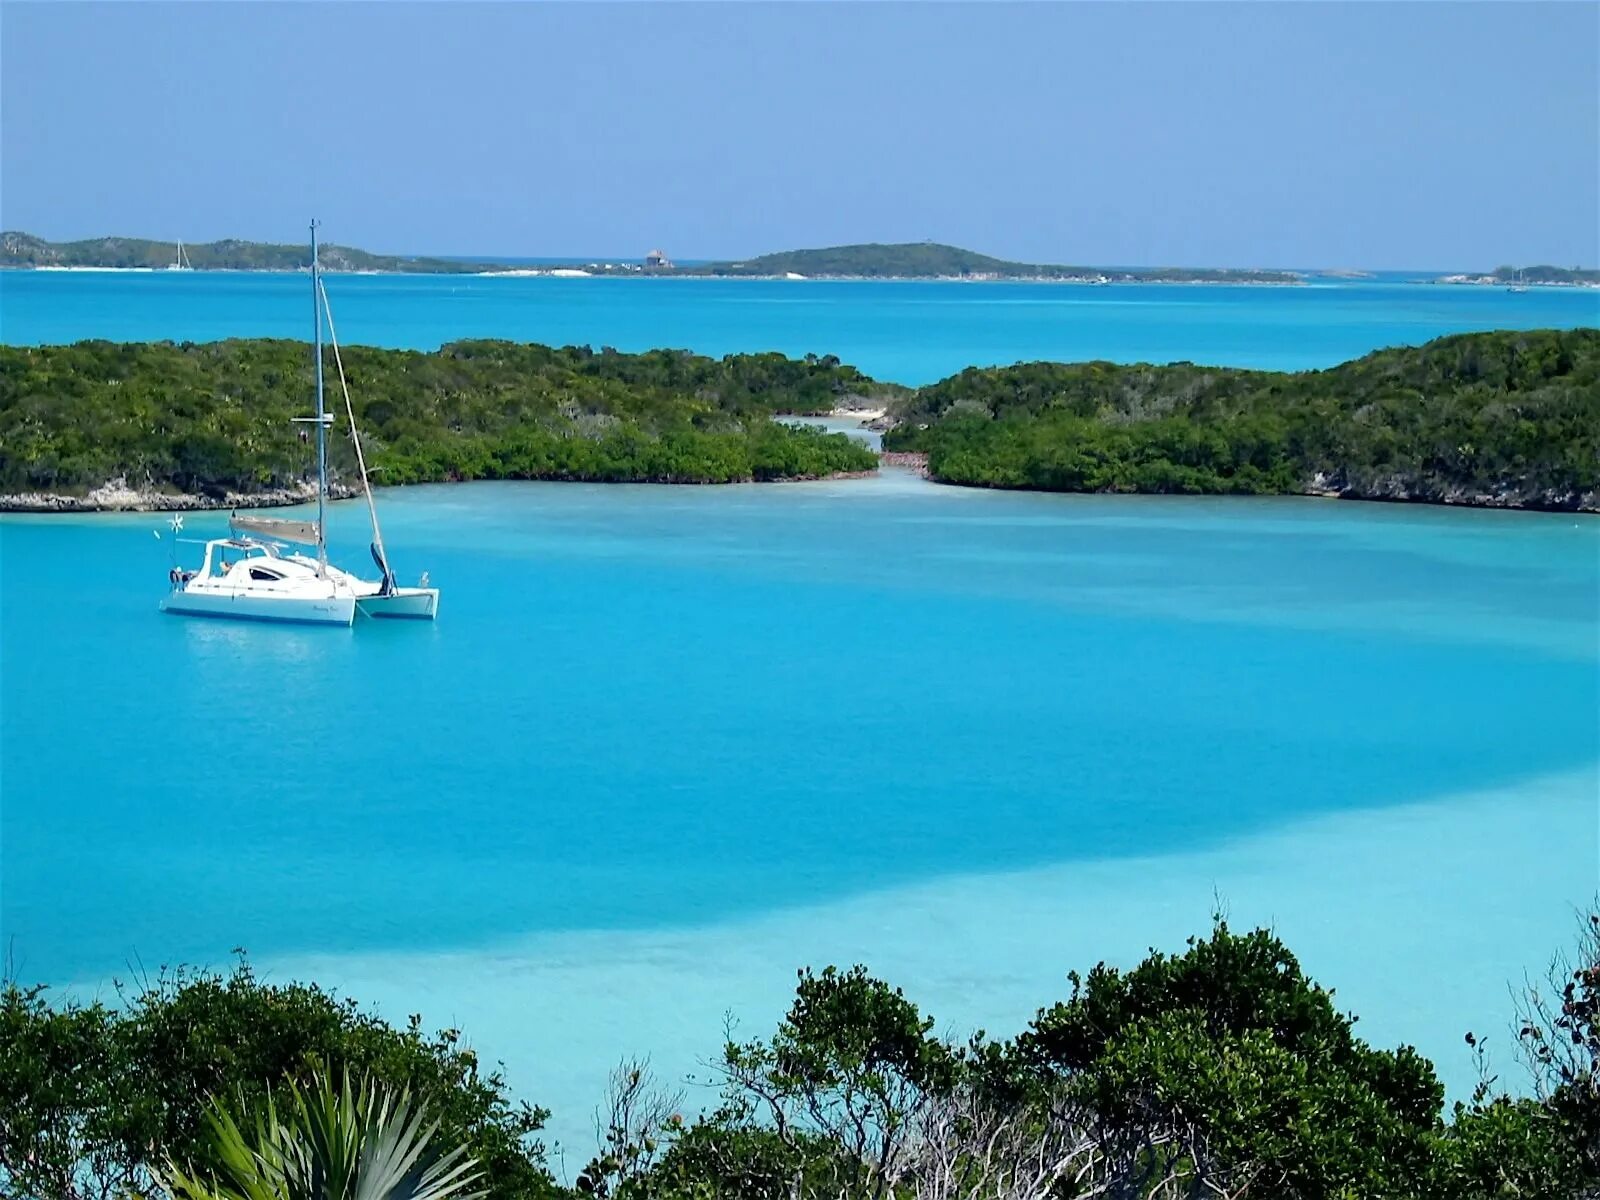 Харбор Айленд Багамы. Марш Харбор, остров Абако, Багамские острова. Багамские острова яхта. Марш-Харбор. Harbor island